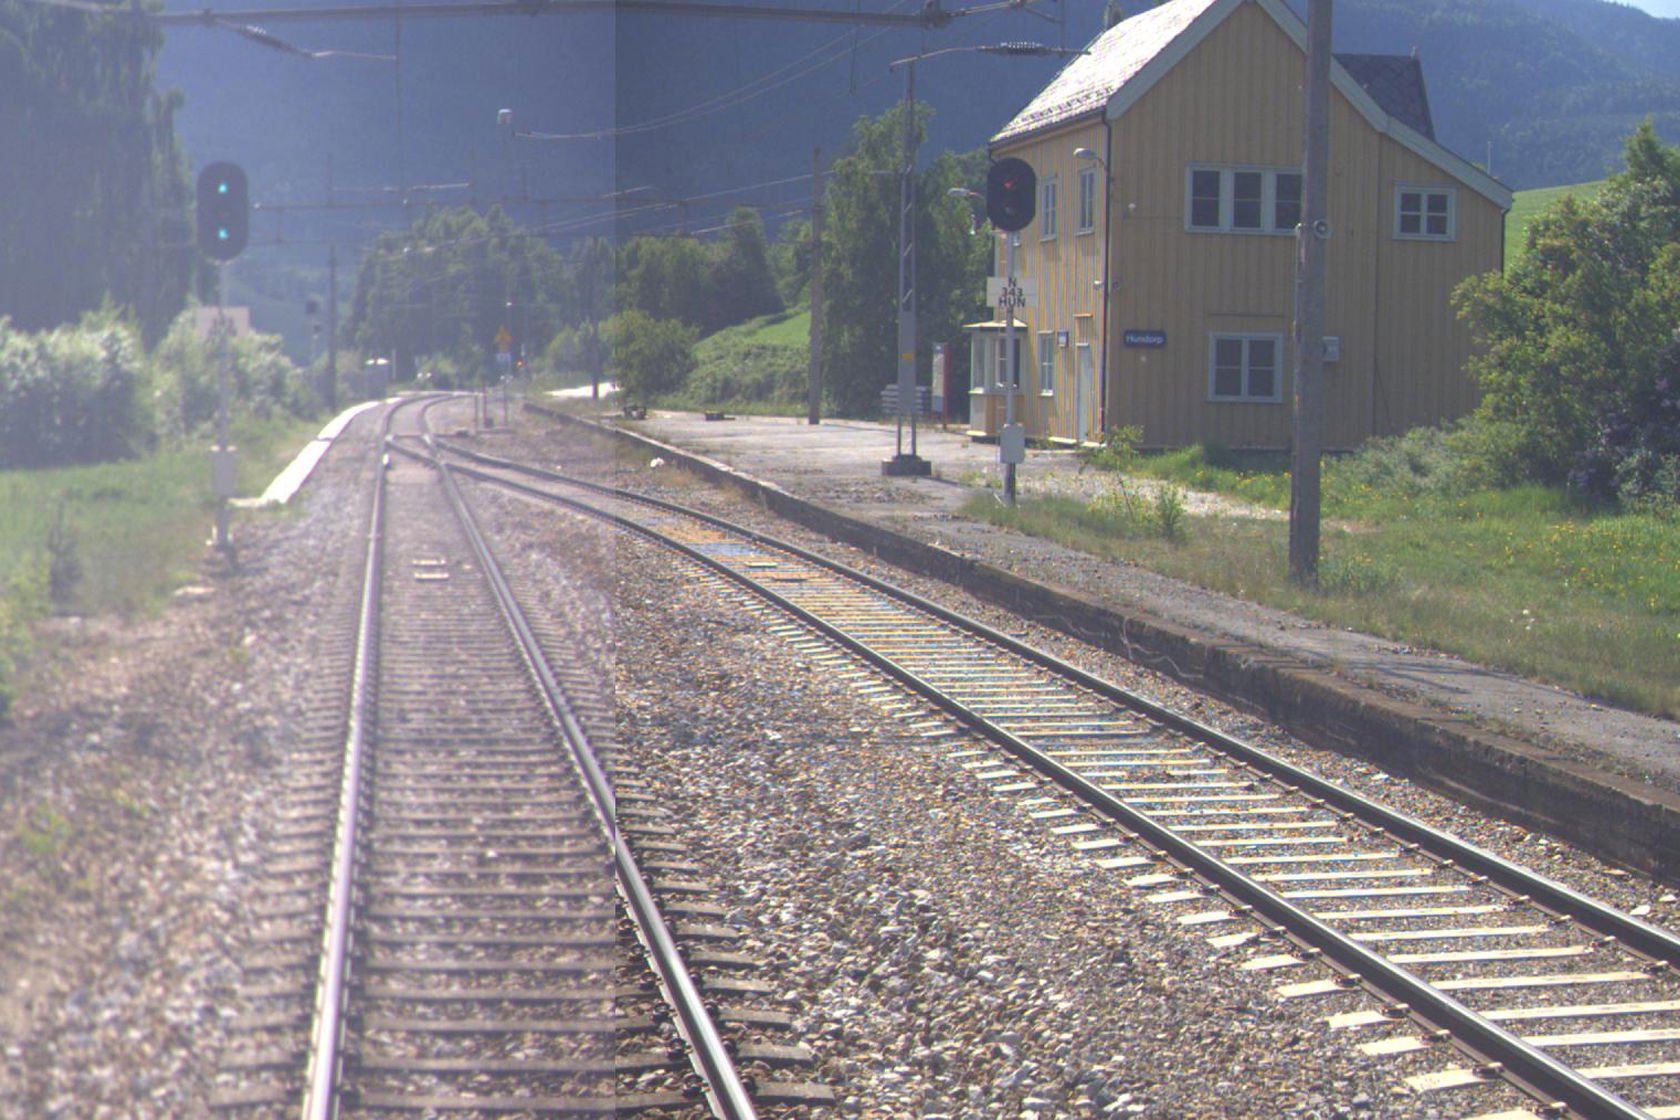 Tracks and station building at Hundorp station